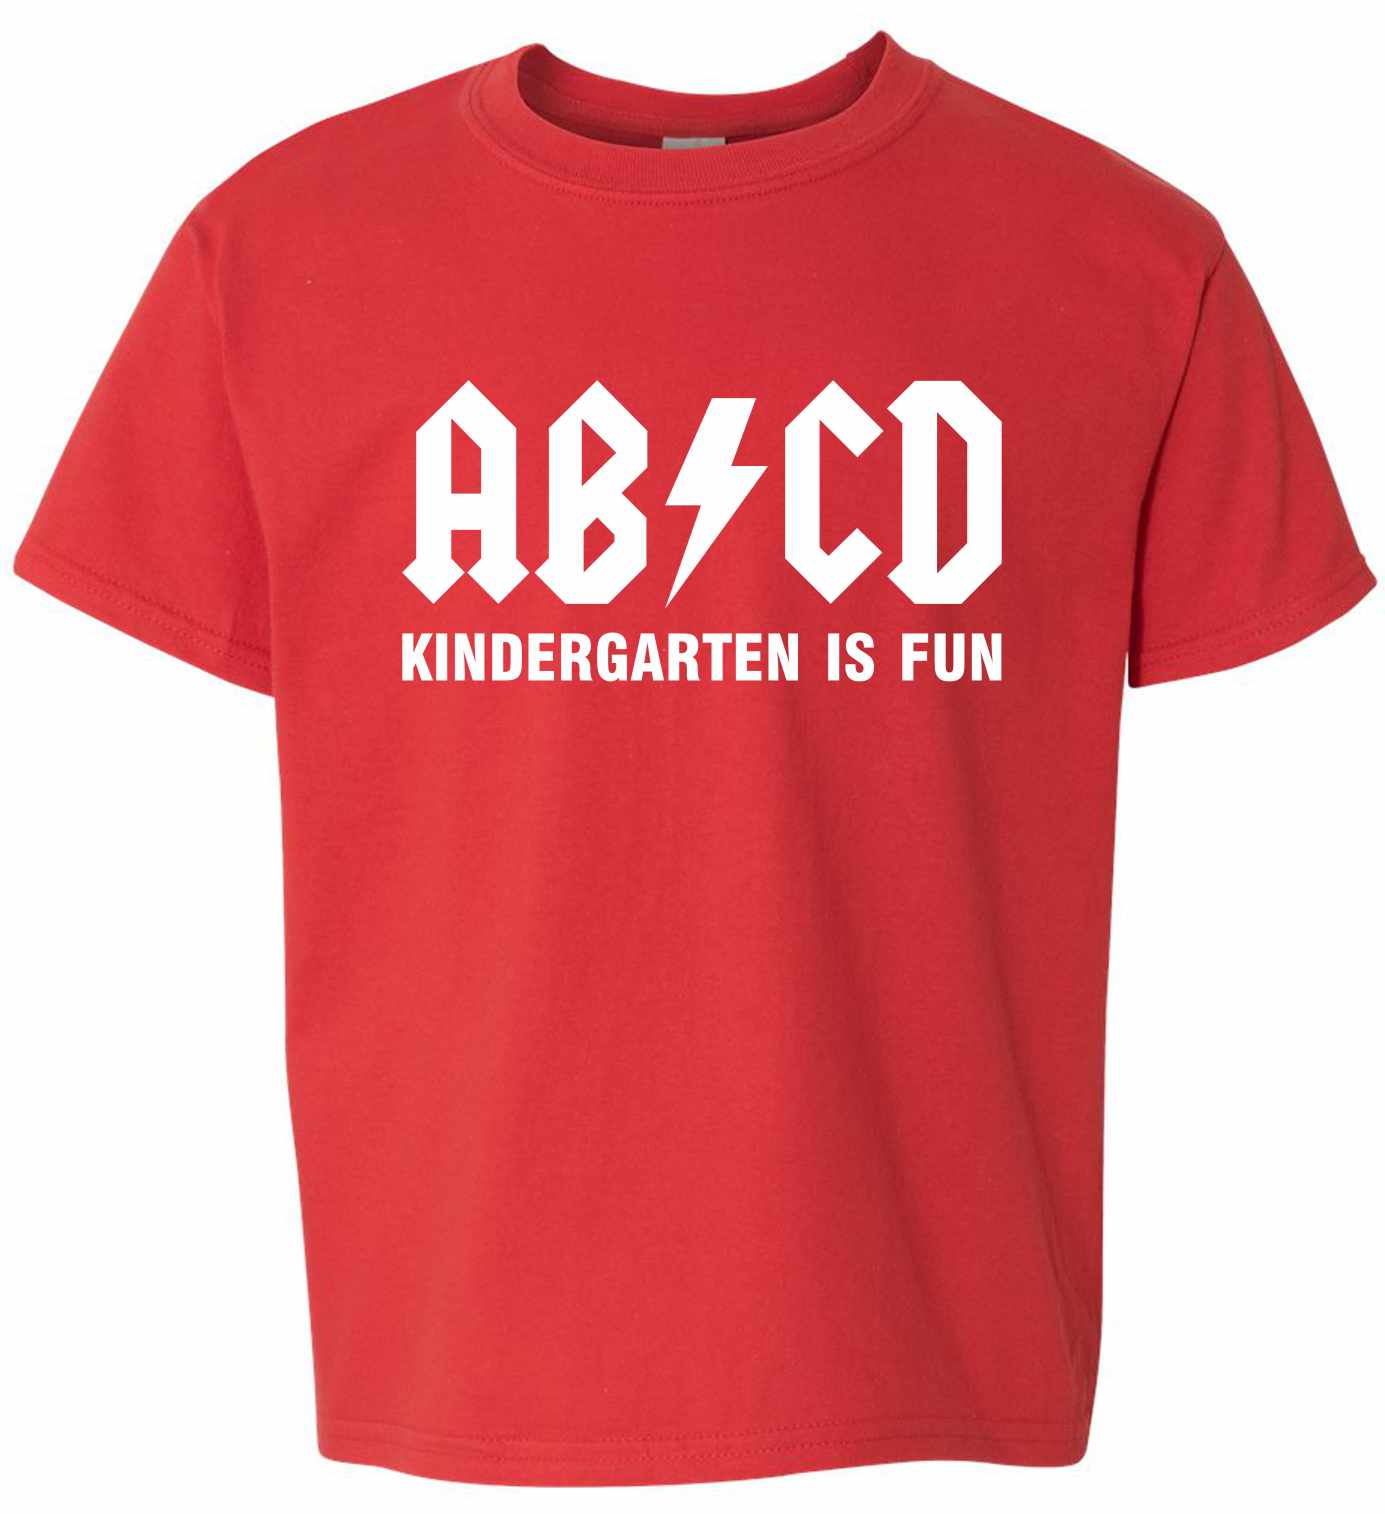 ABCD Kindergarten Is Fun on Kids T-Shirt (#1374-201)